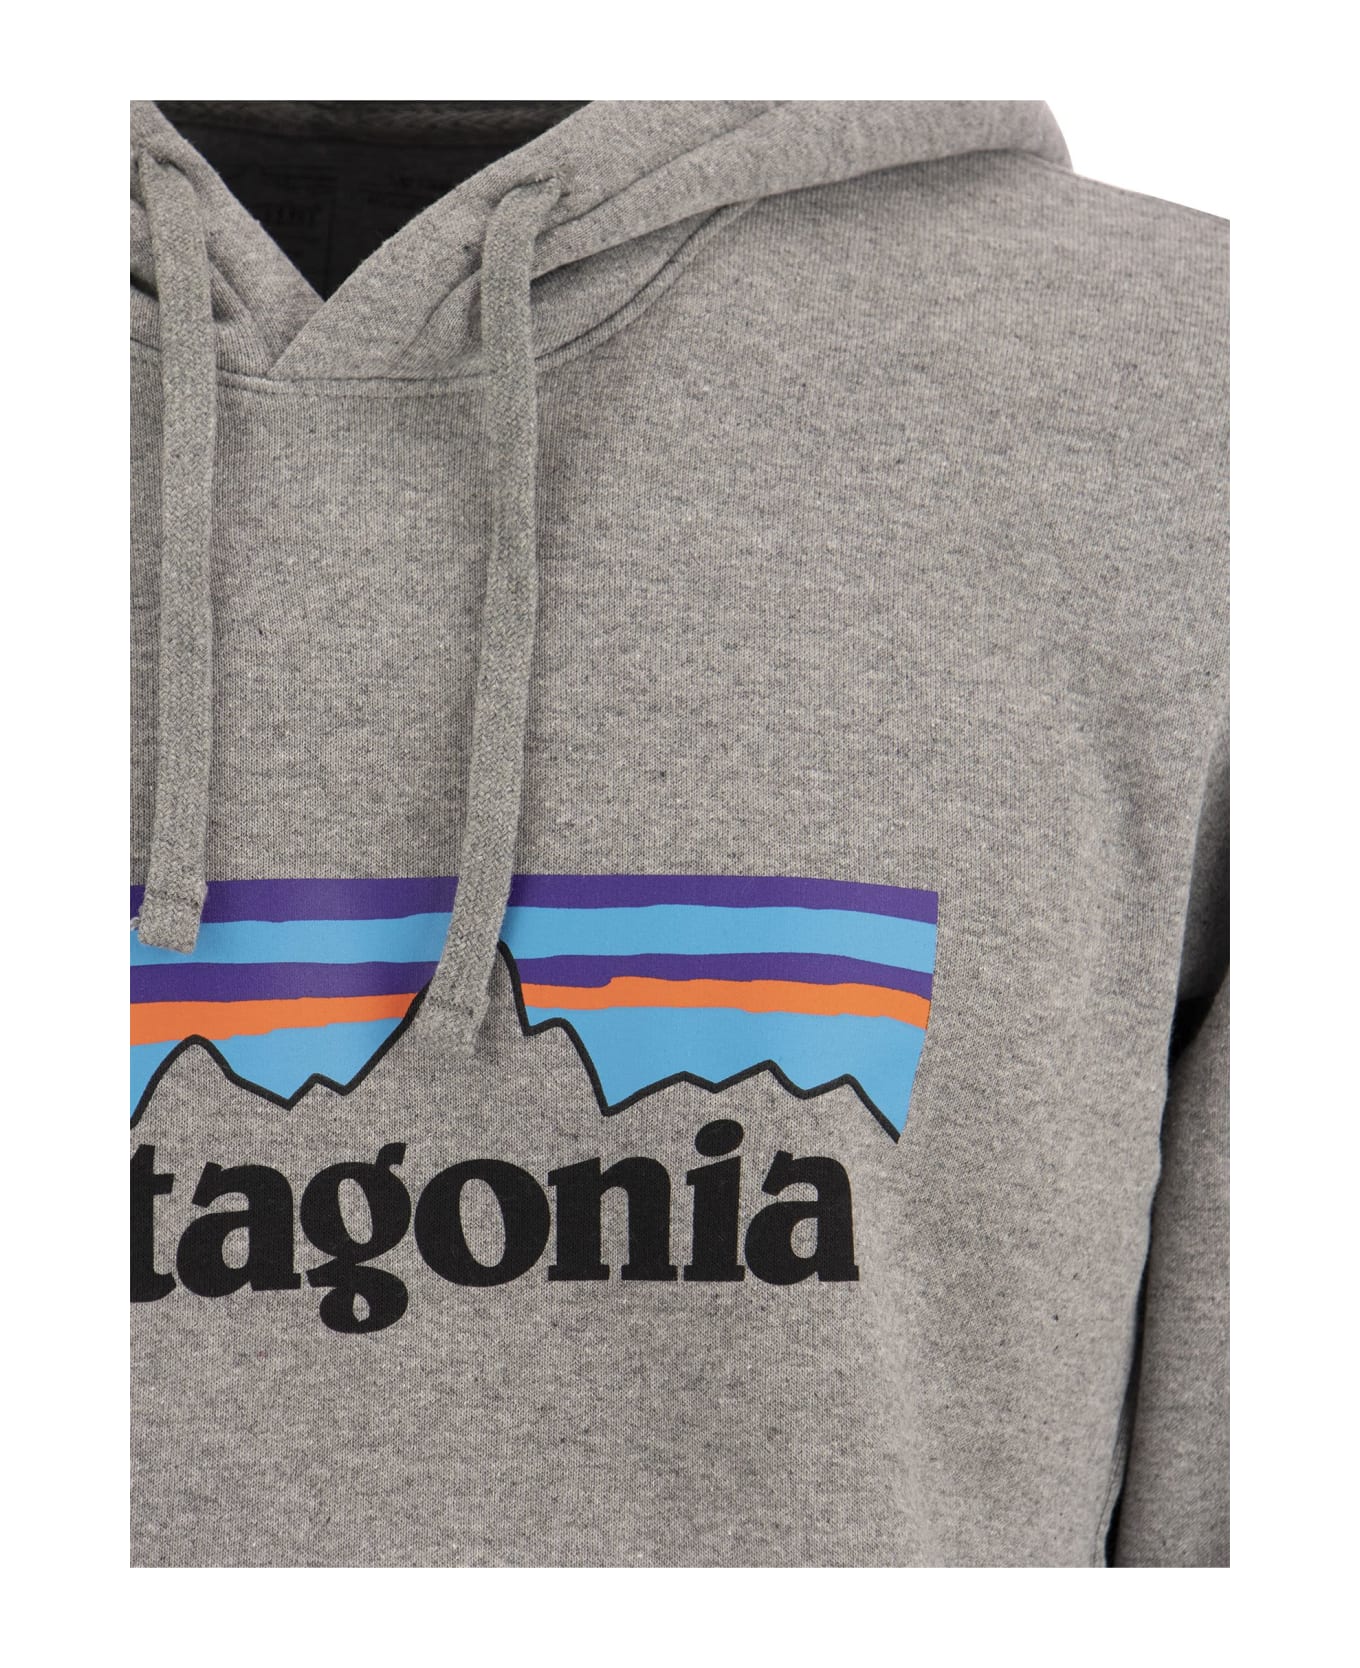 Patagonia Cotton Blend Hoodie - Grey